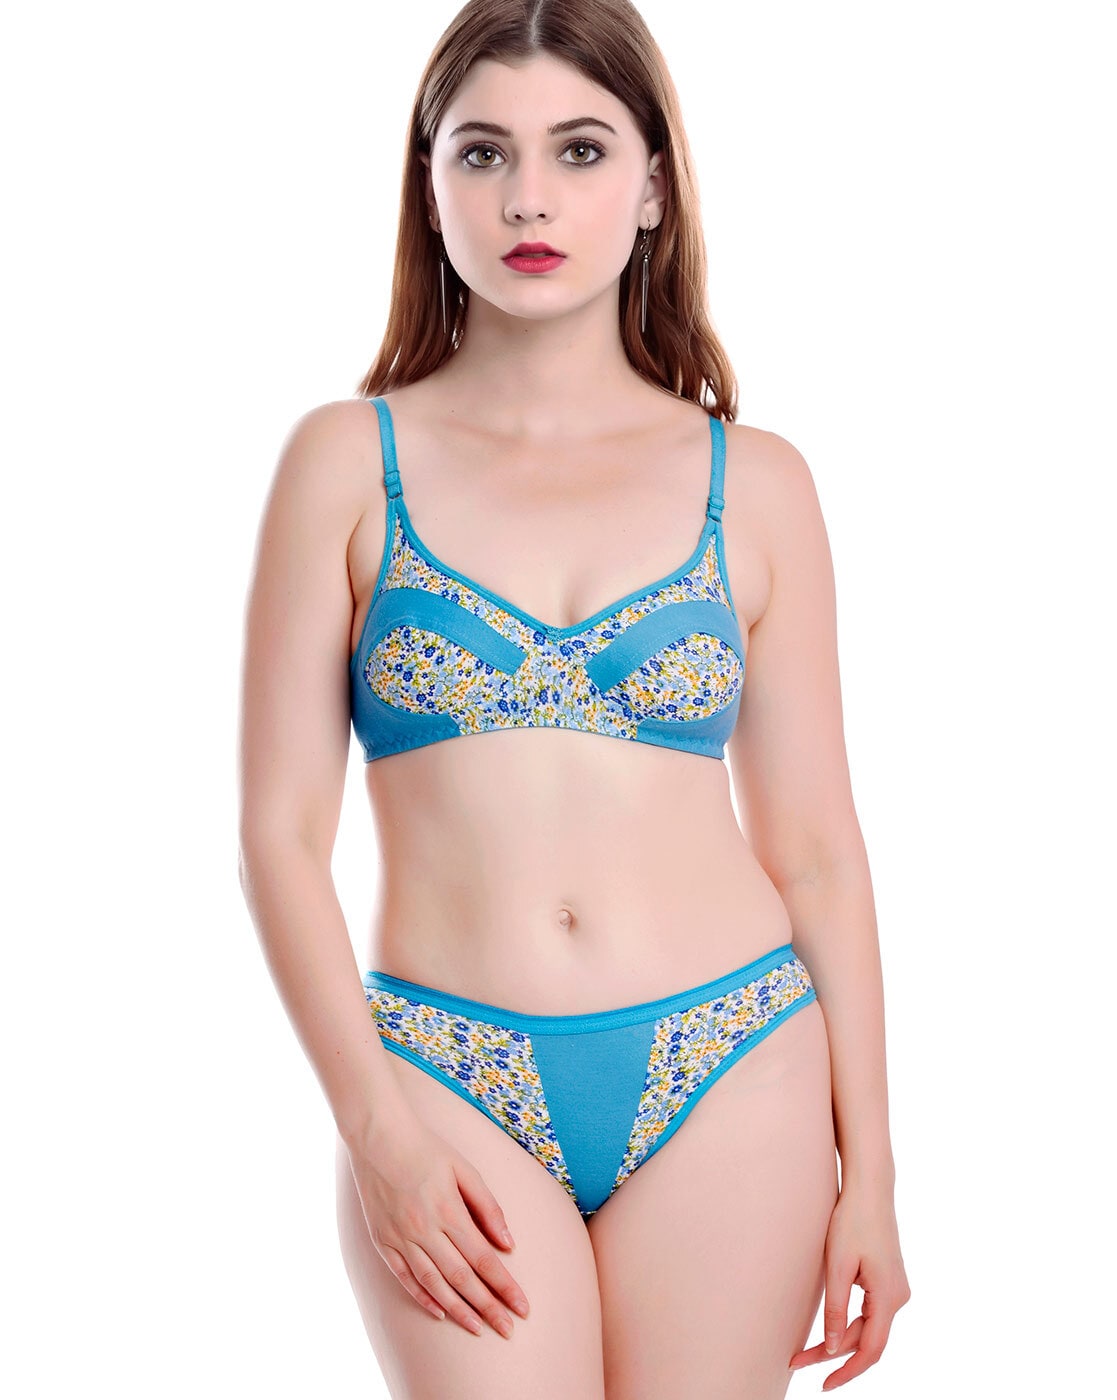 Blue Net Bra Panty Set, Size: 32B, 34B, Large at best price in New Delhi